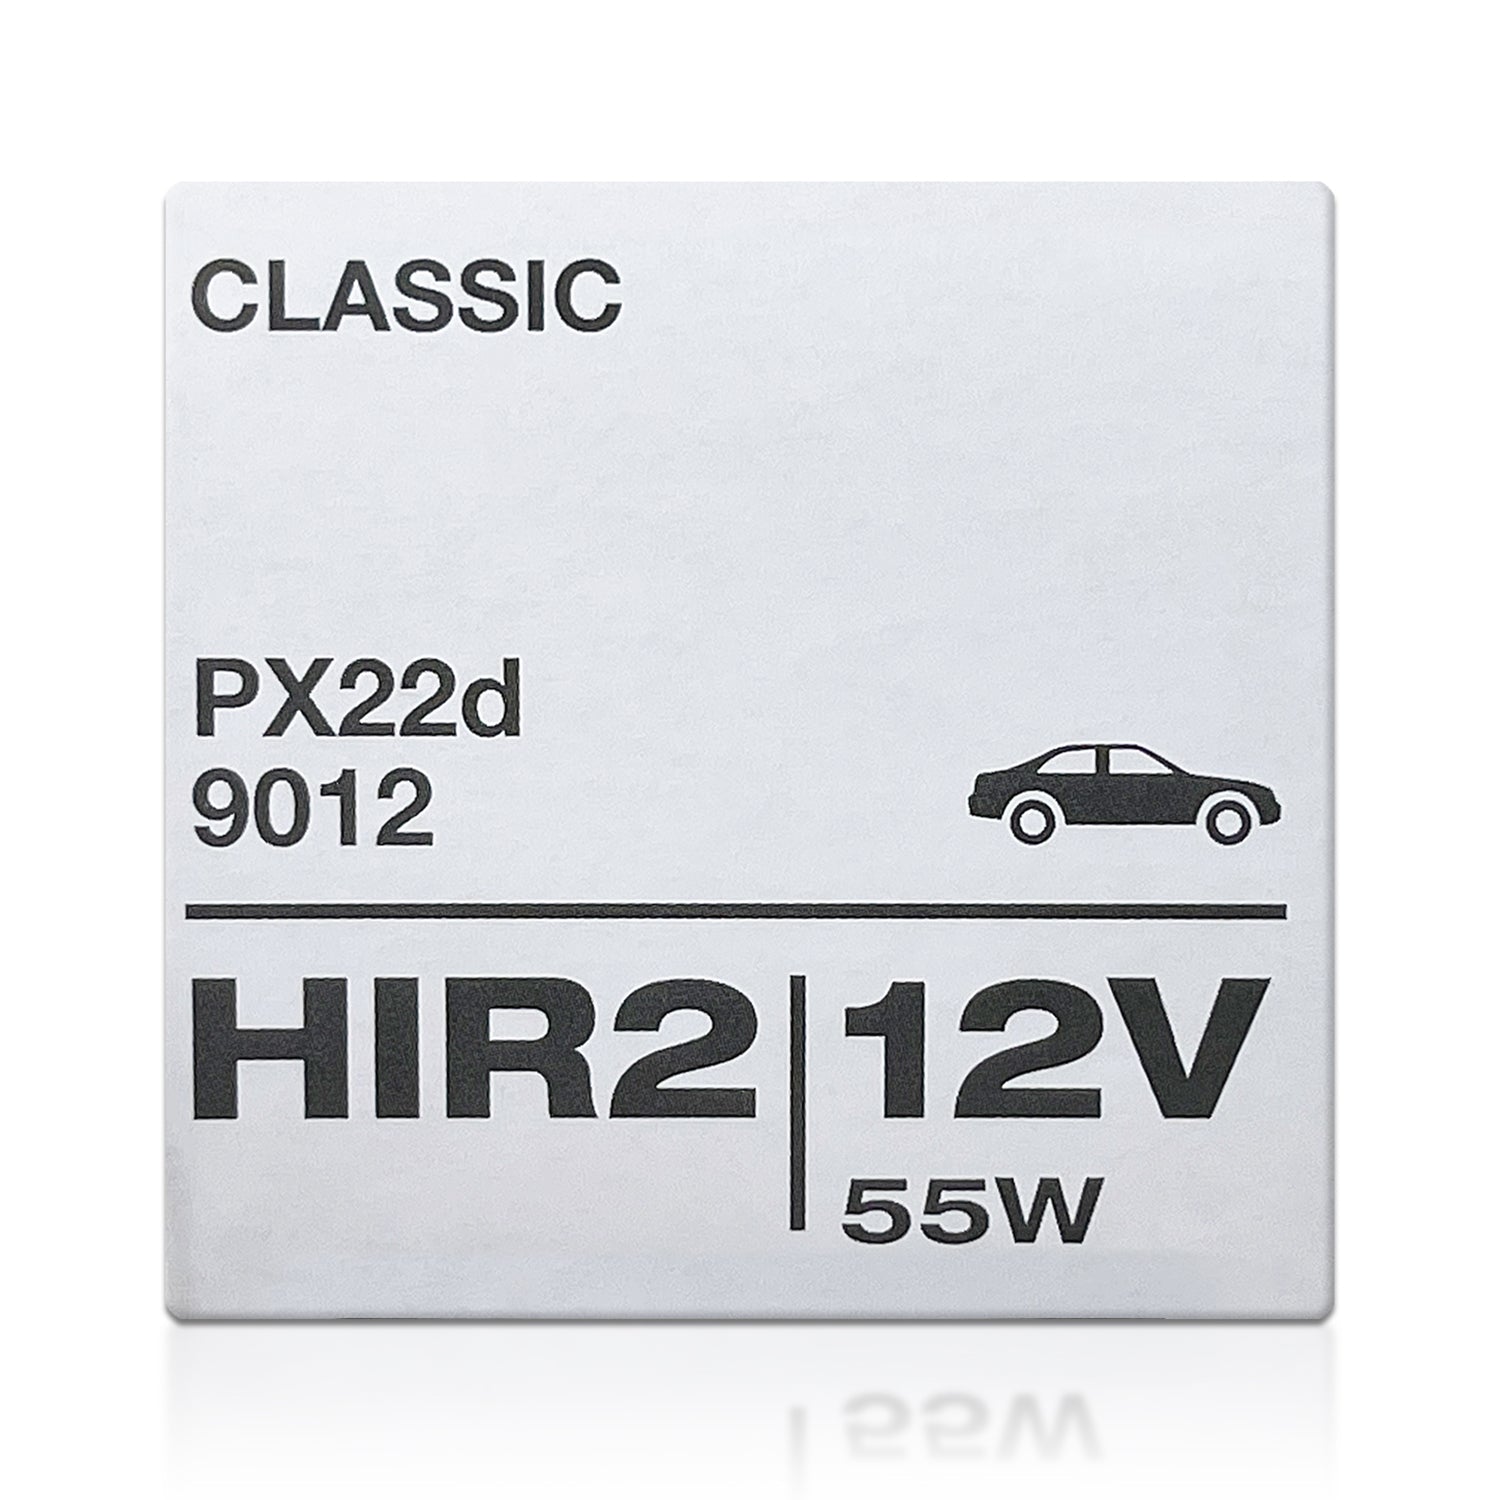 OSRAM HIR2 12V 55W 9012 PX22d 3200K Original Line Bulb Halogen Headlight  Auto Lamp OEM Quality(1 Bulb)